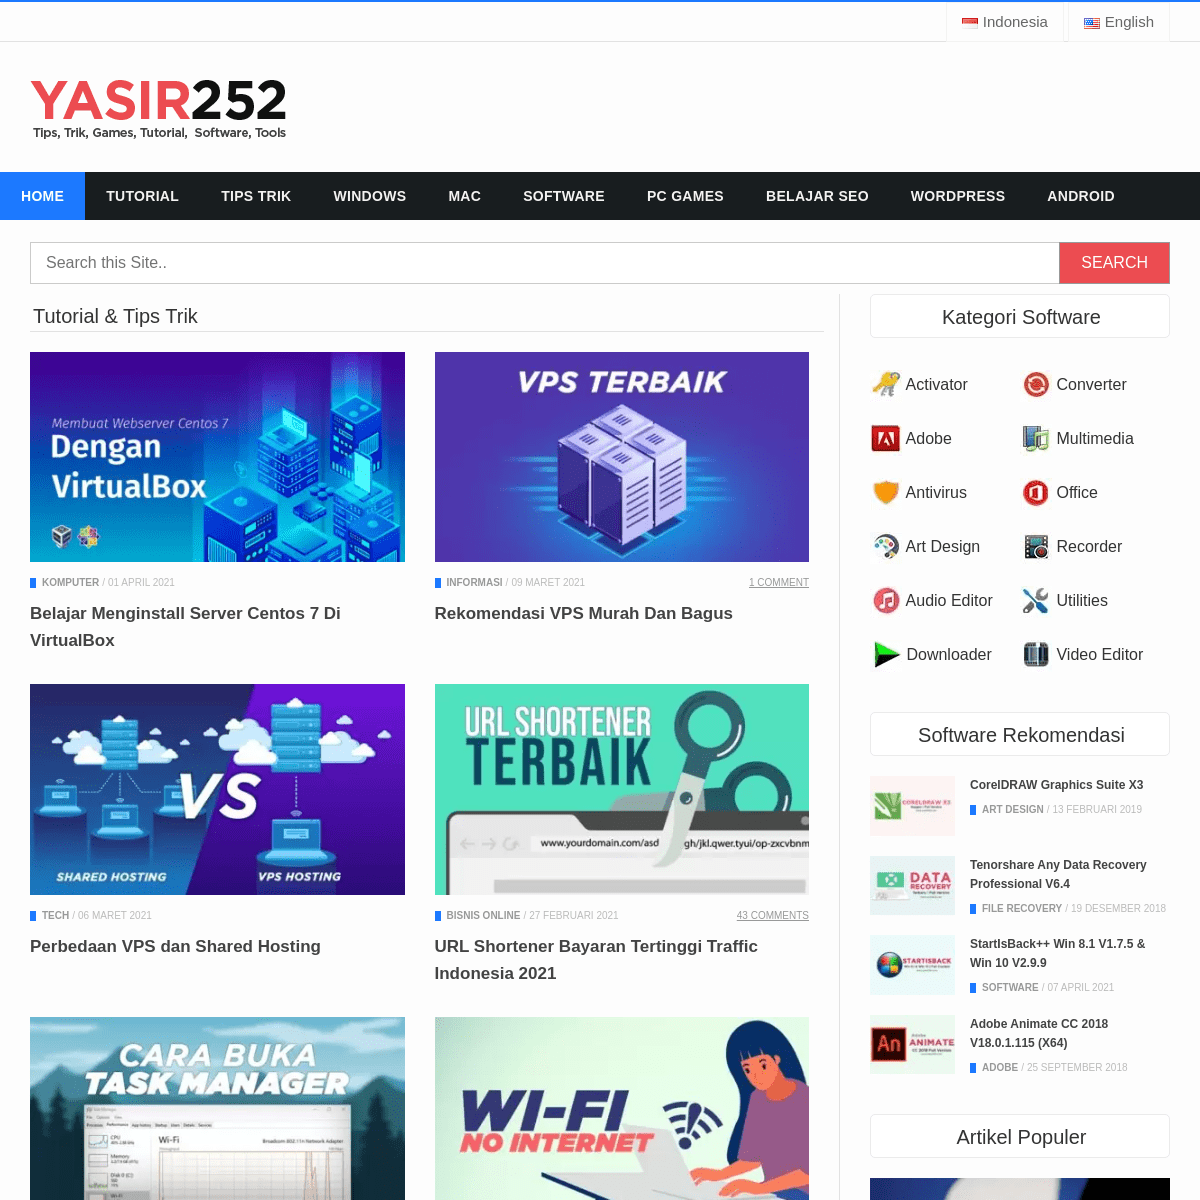 A complete backup of https://yasir252.com